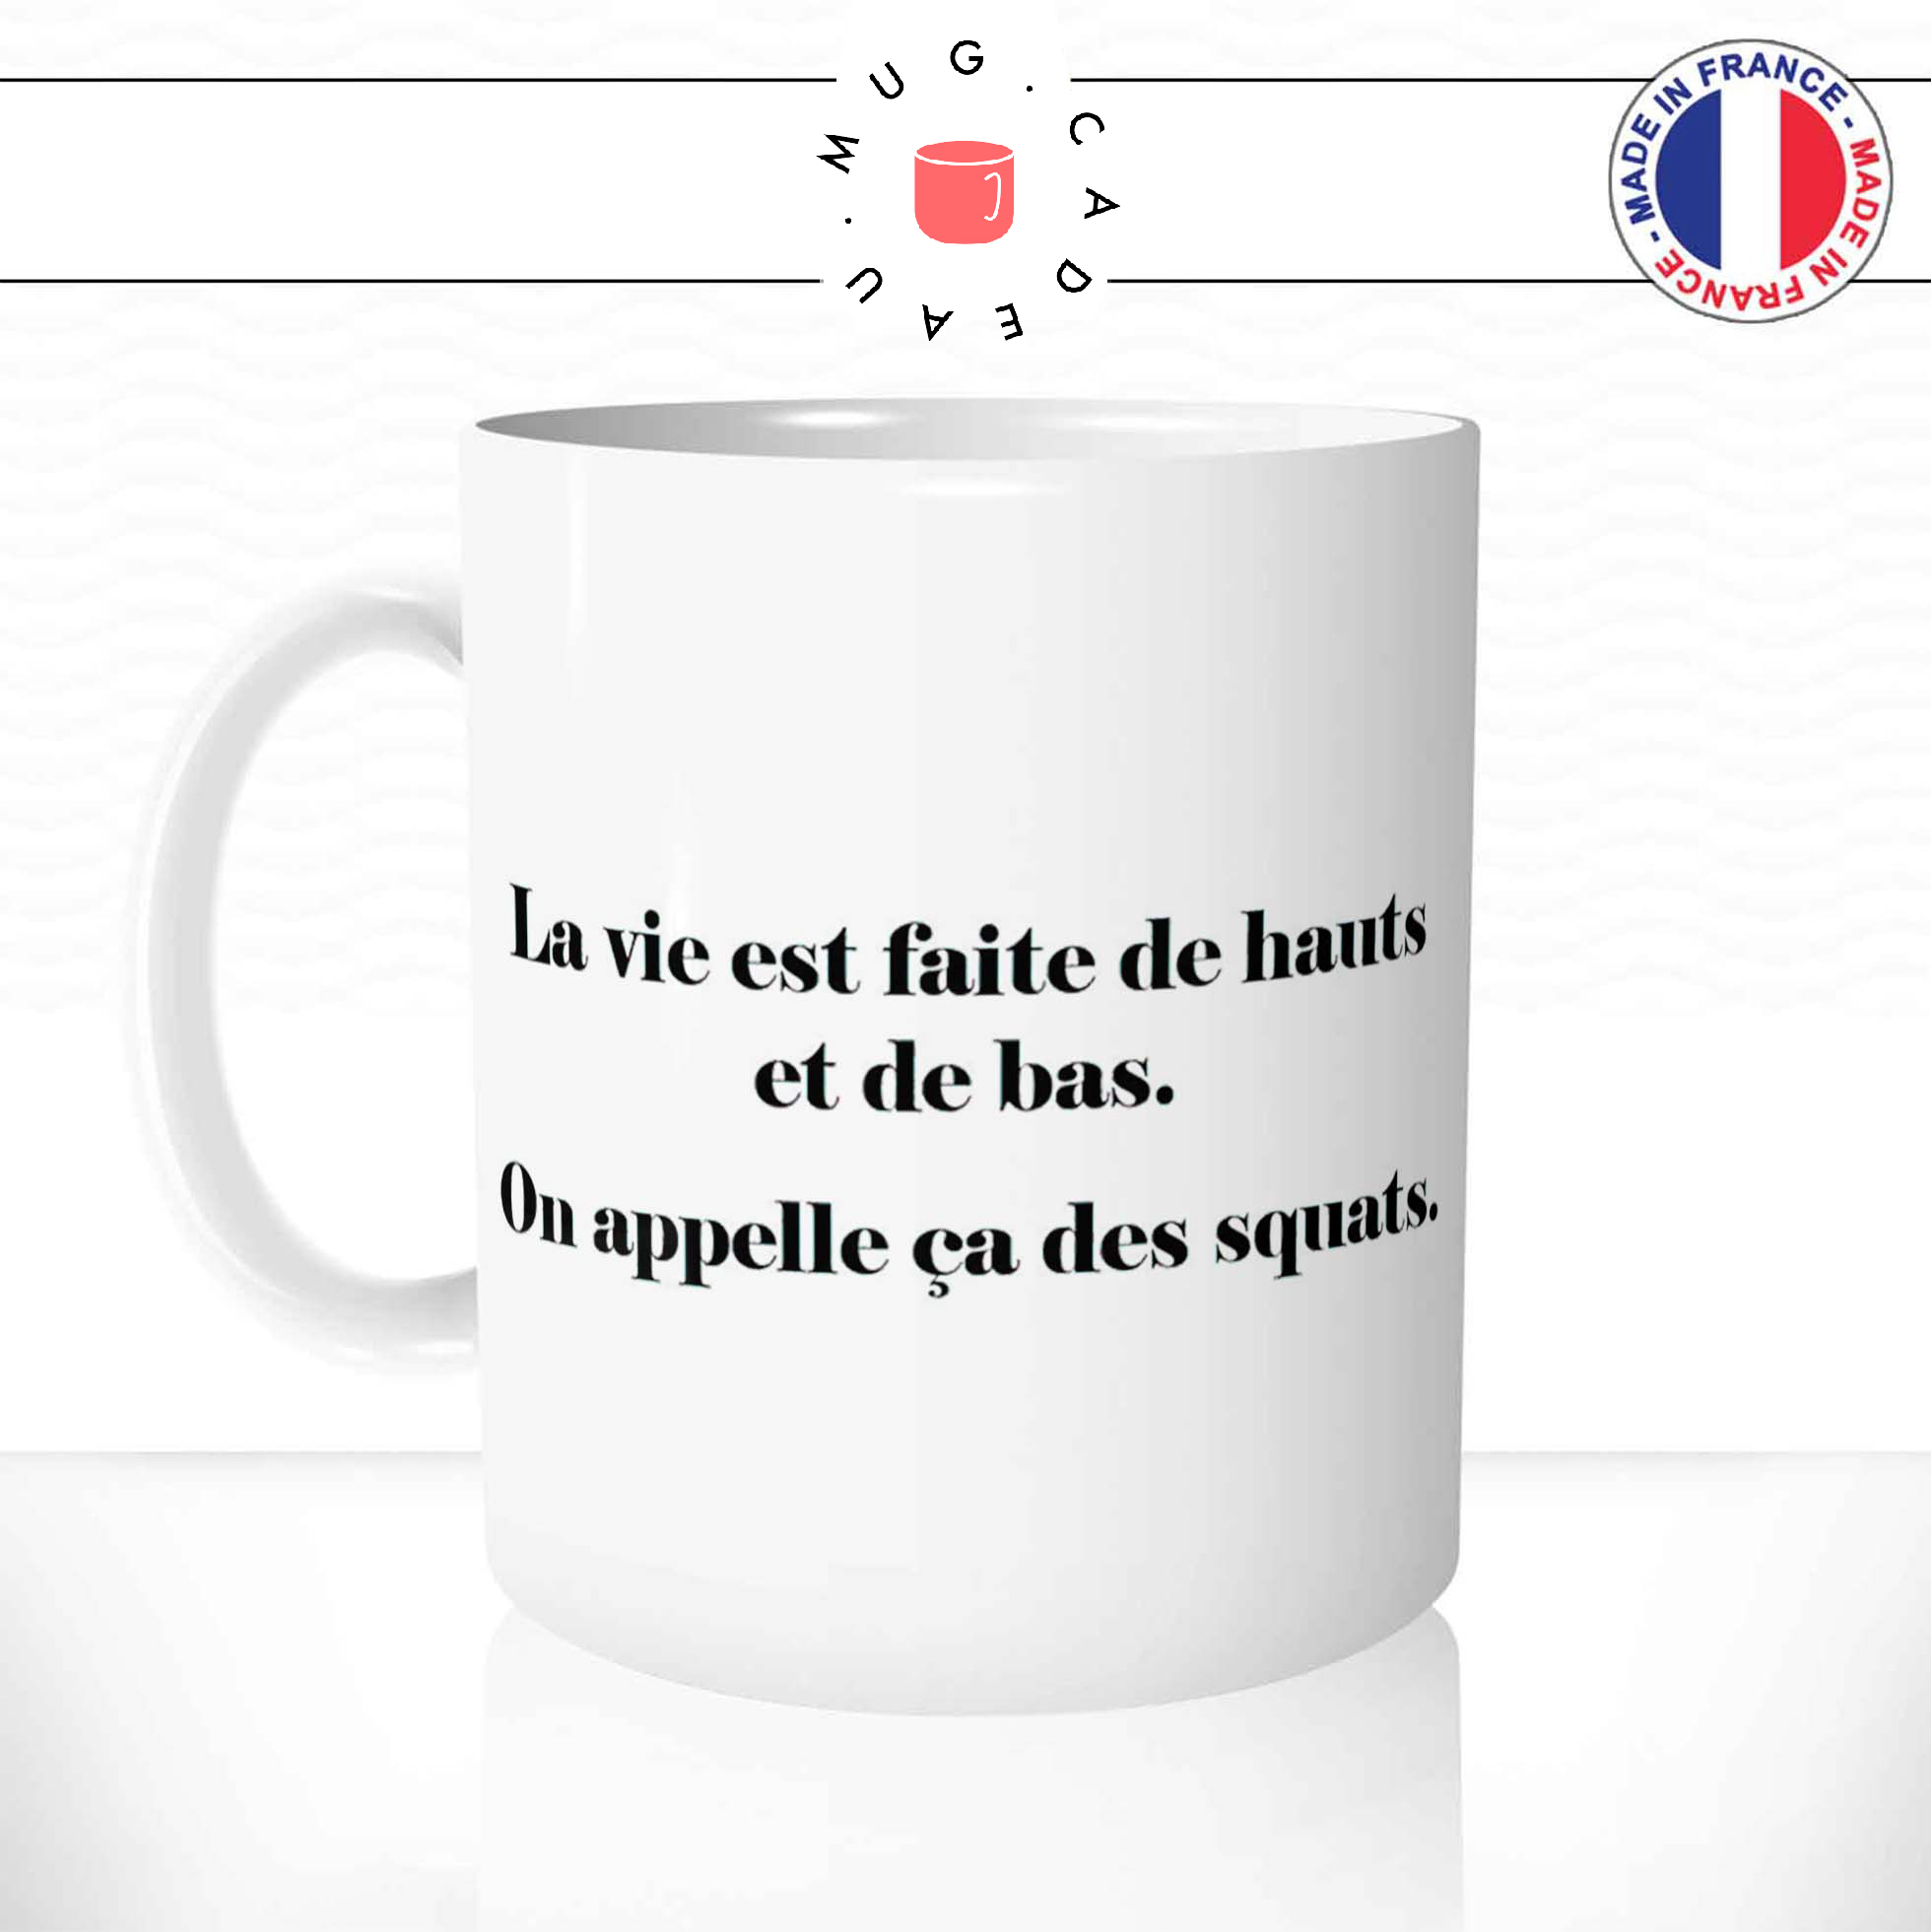 mug-tasse-ref2-citation-motivation-vie-hauts-bas-squats-cafe-the-mugs-tasses-personnalise-anse-gauche